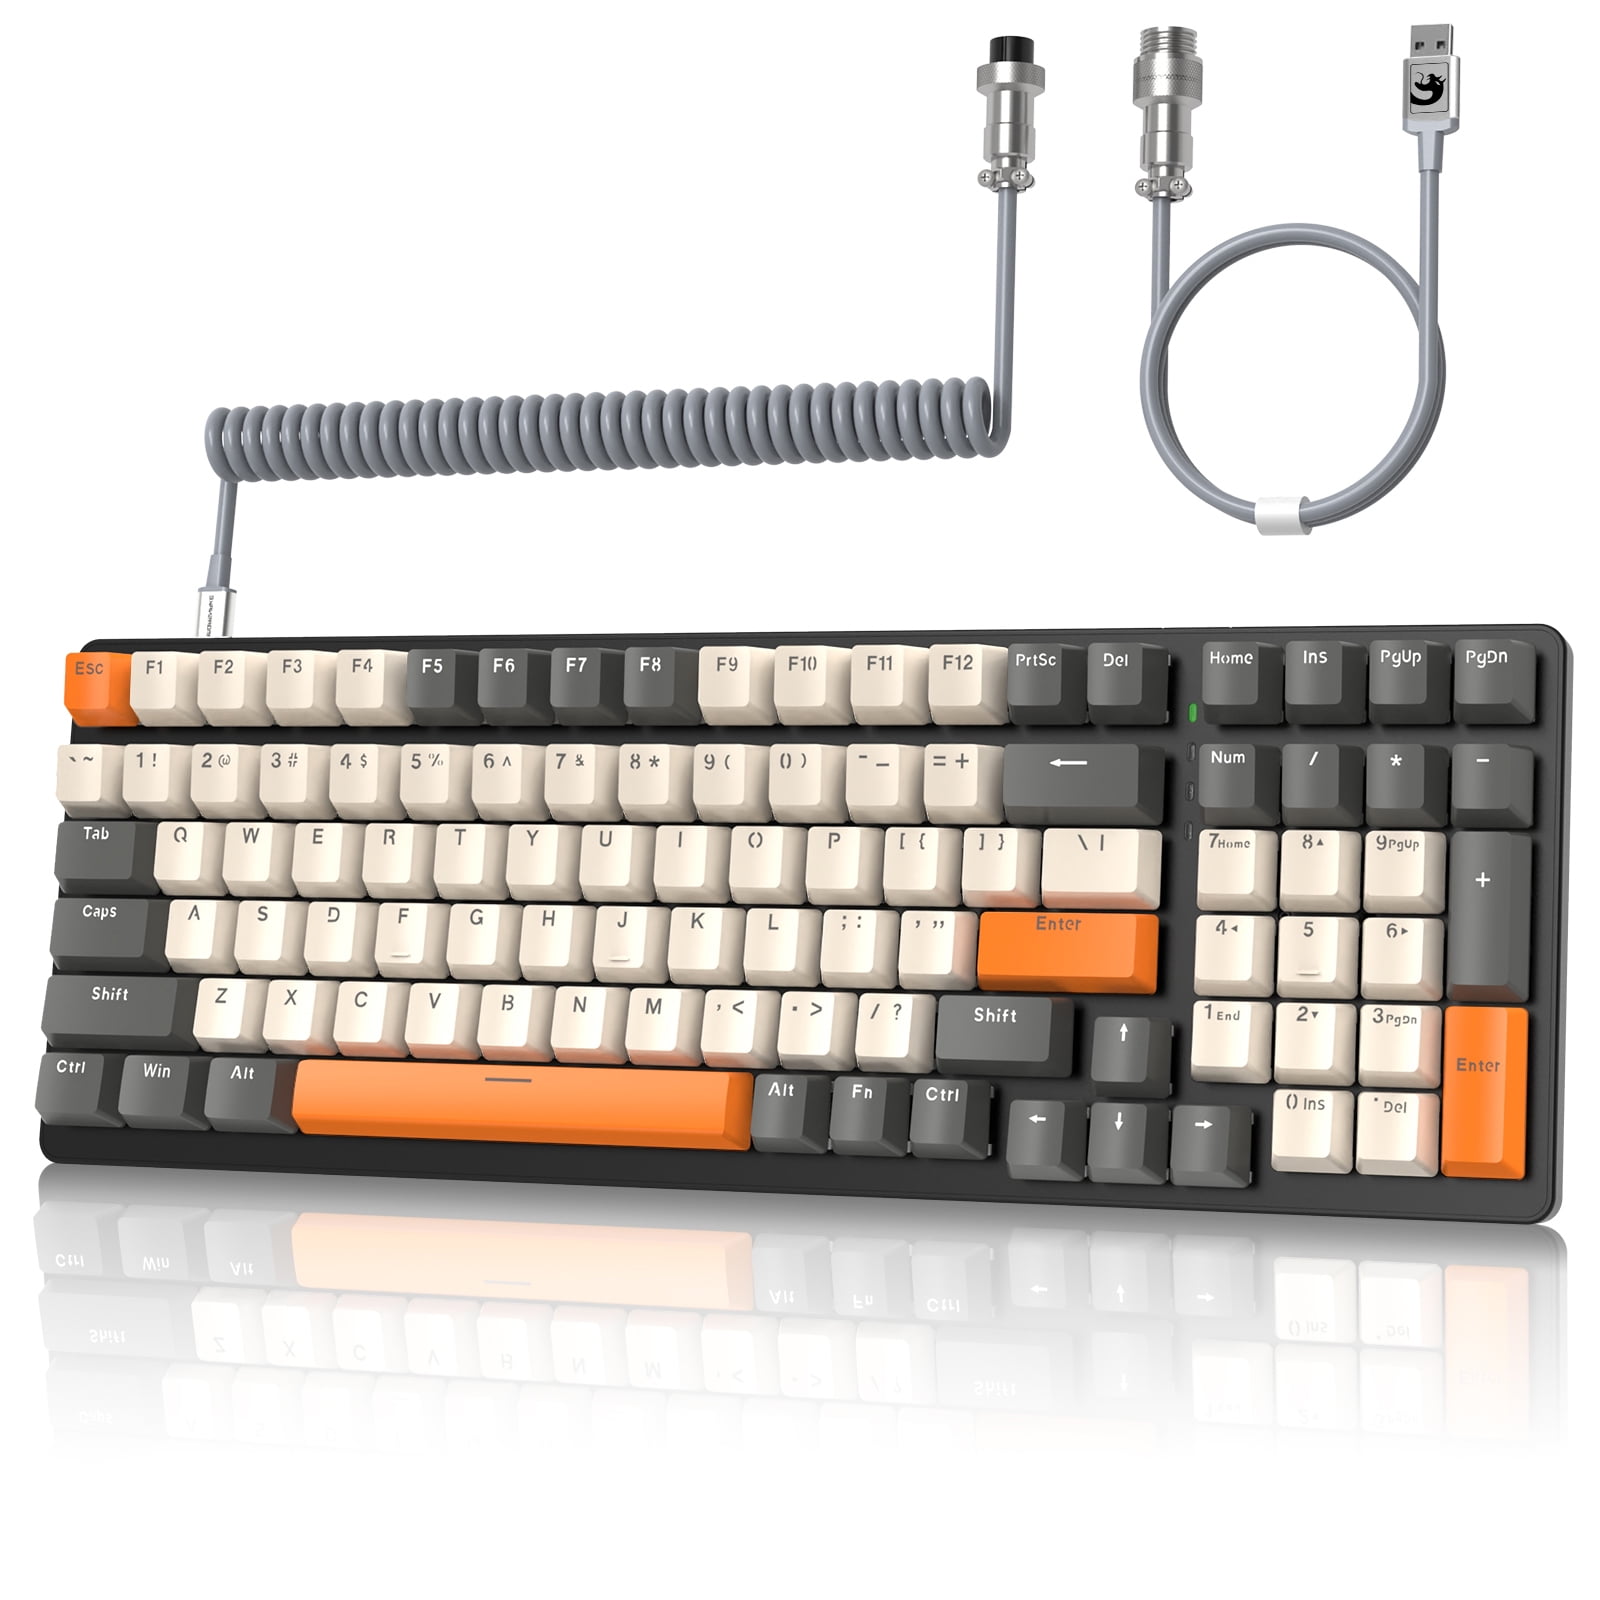 HXSJ K3 Mechanical Keyboard Ultra-Compact Mini 98 Keys Wired Type